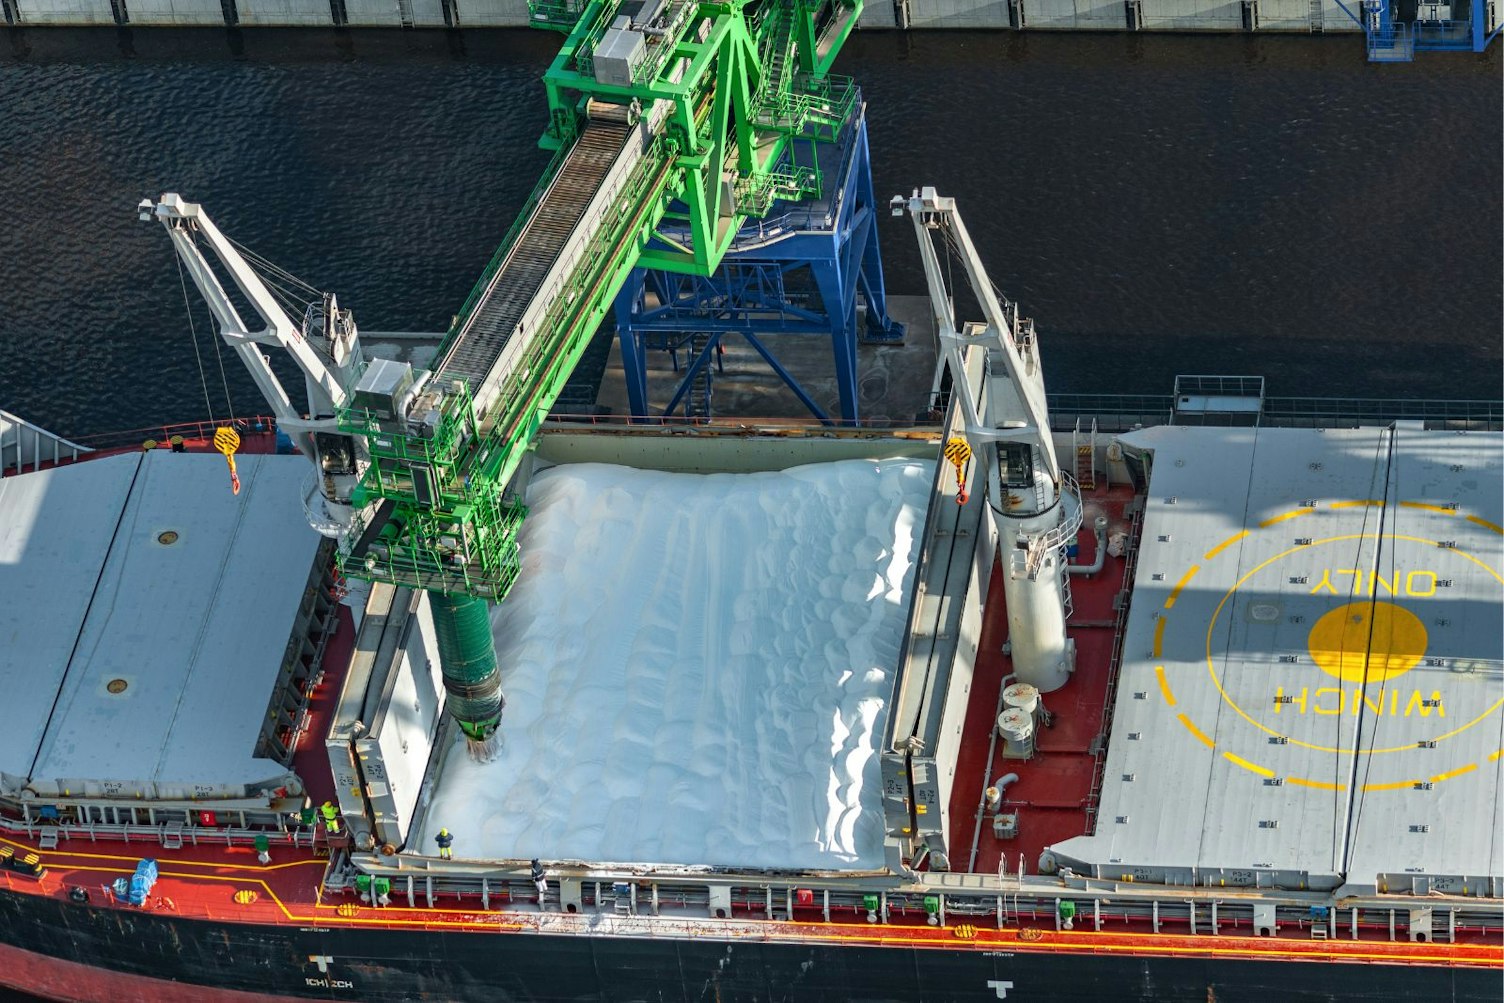 Crane Loading Materials on Cargo Ship